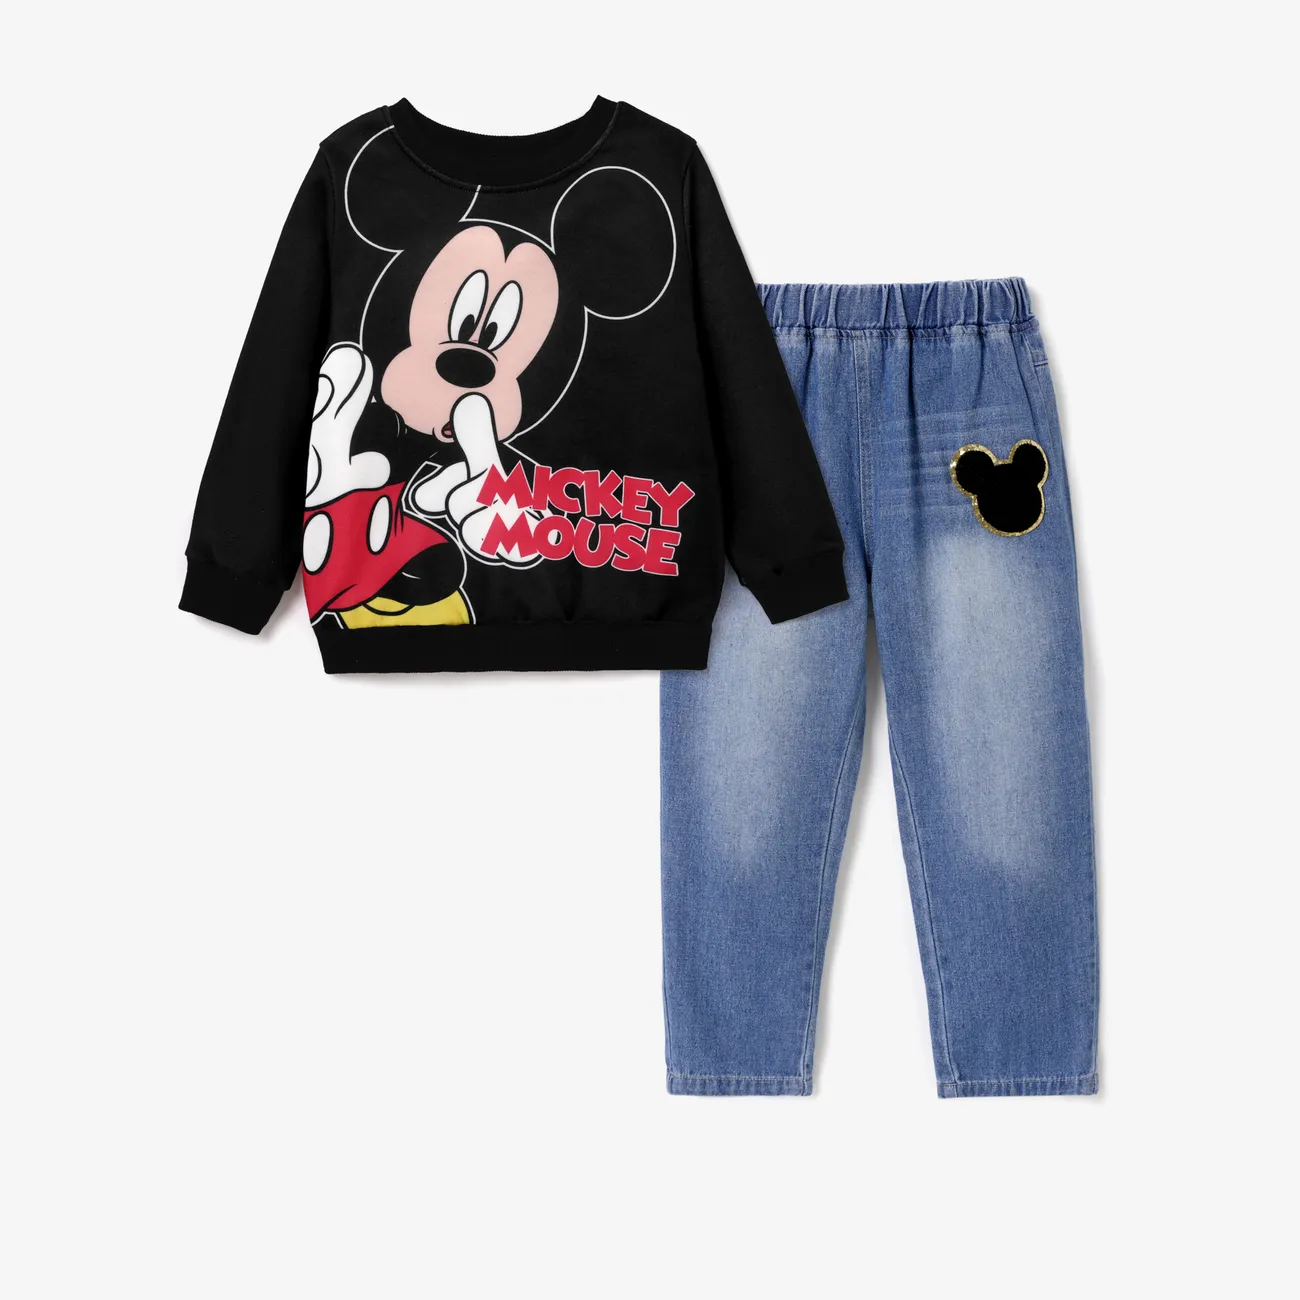 isney Mickey and Friends Toddler/Kid Boy Cotton Denim Jeans o Disney Mickey and Minnie Character Pattern Print Crew Neck Sweatshirt azul vaquero big image 1